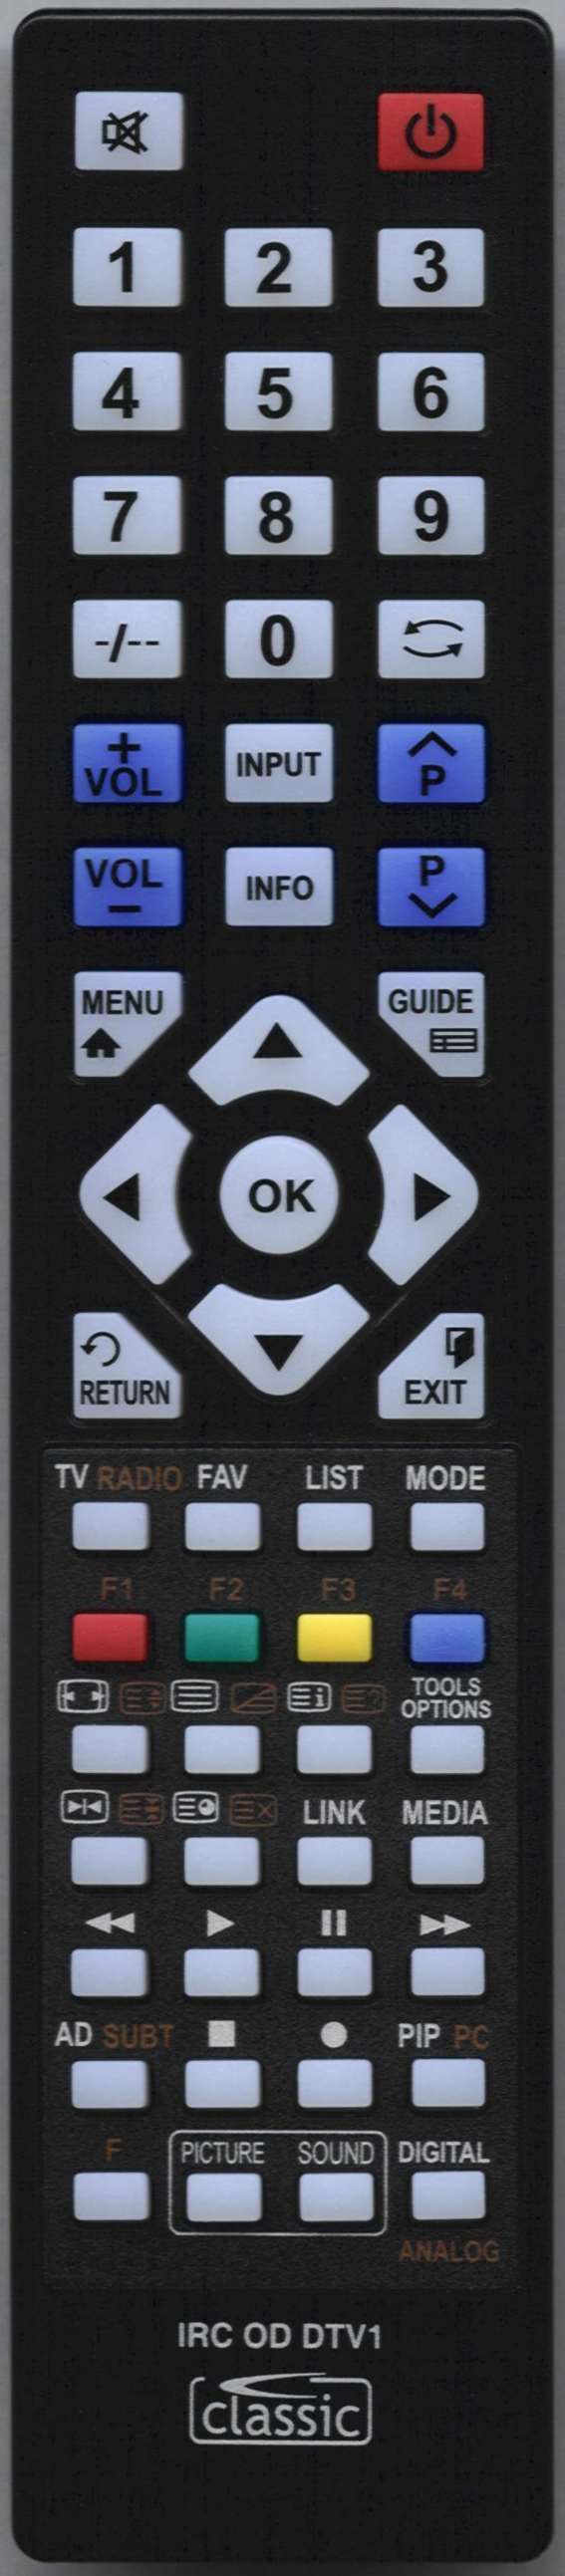 TECHWOOD LCD32860 Remote Control 